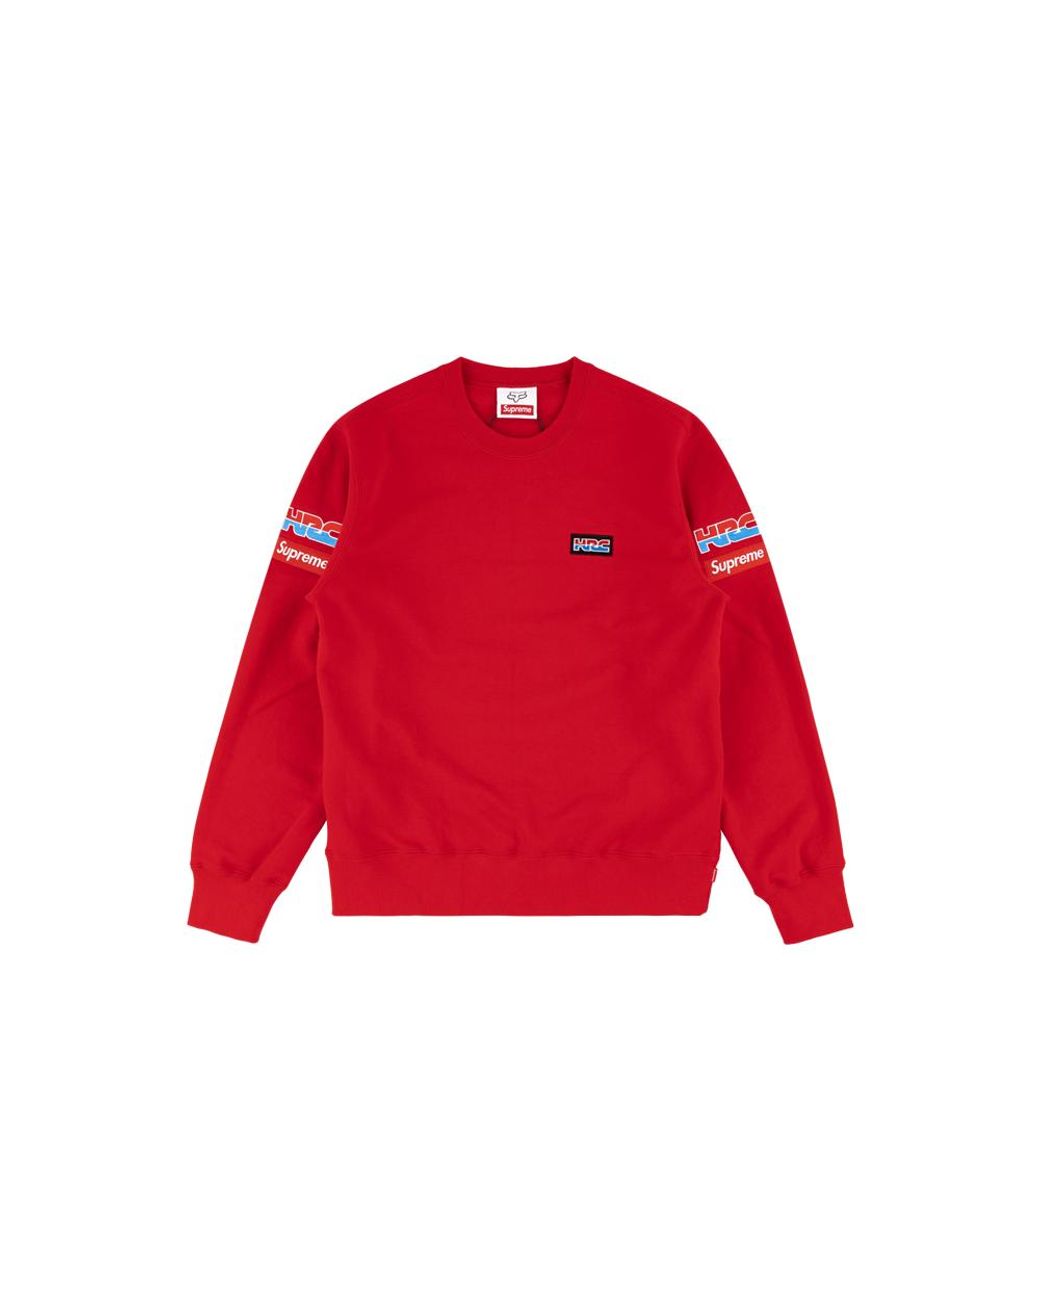 Supreme Men's Red Honda Fox Racing Sweatshirt